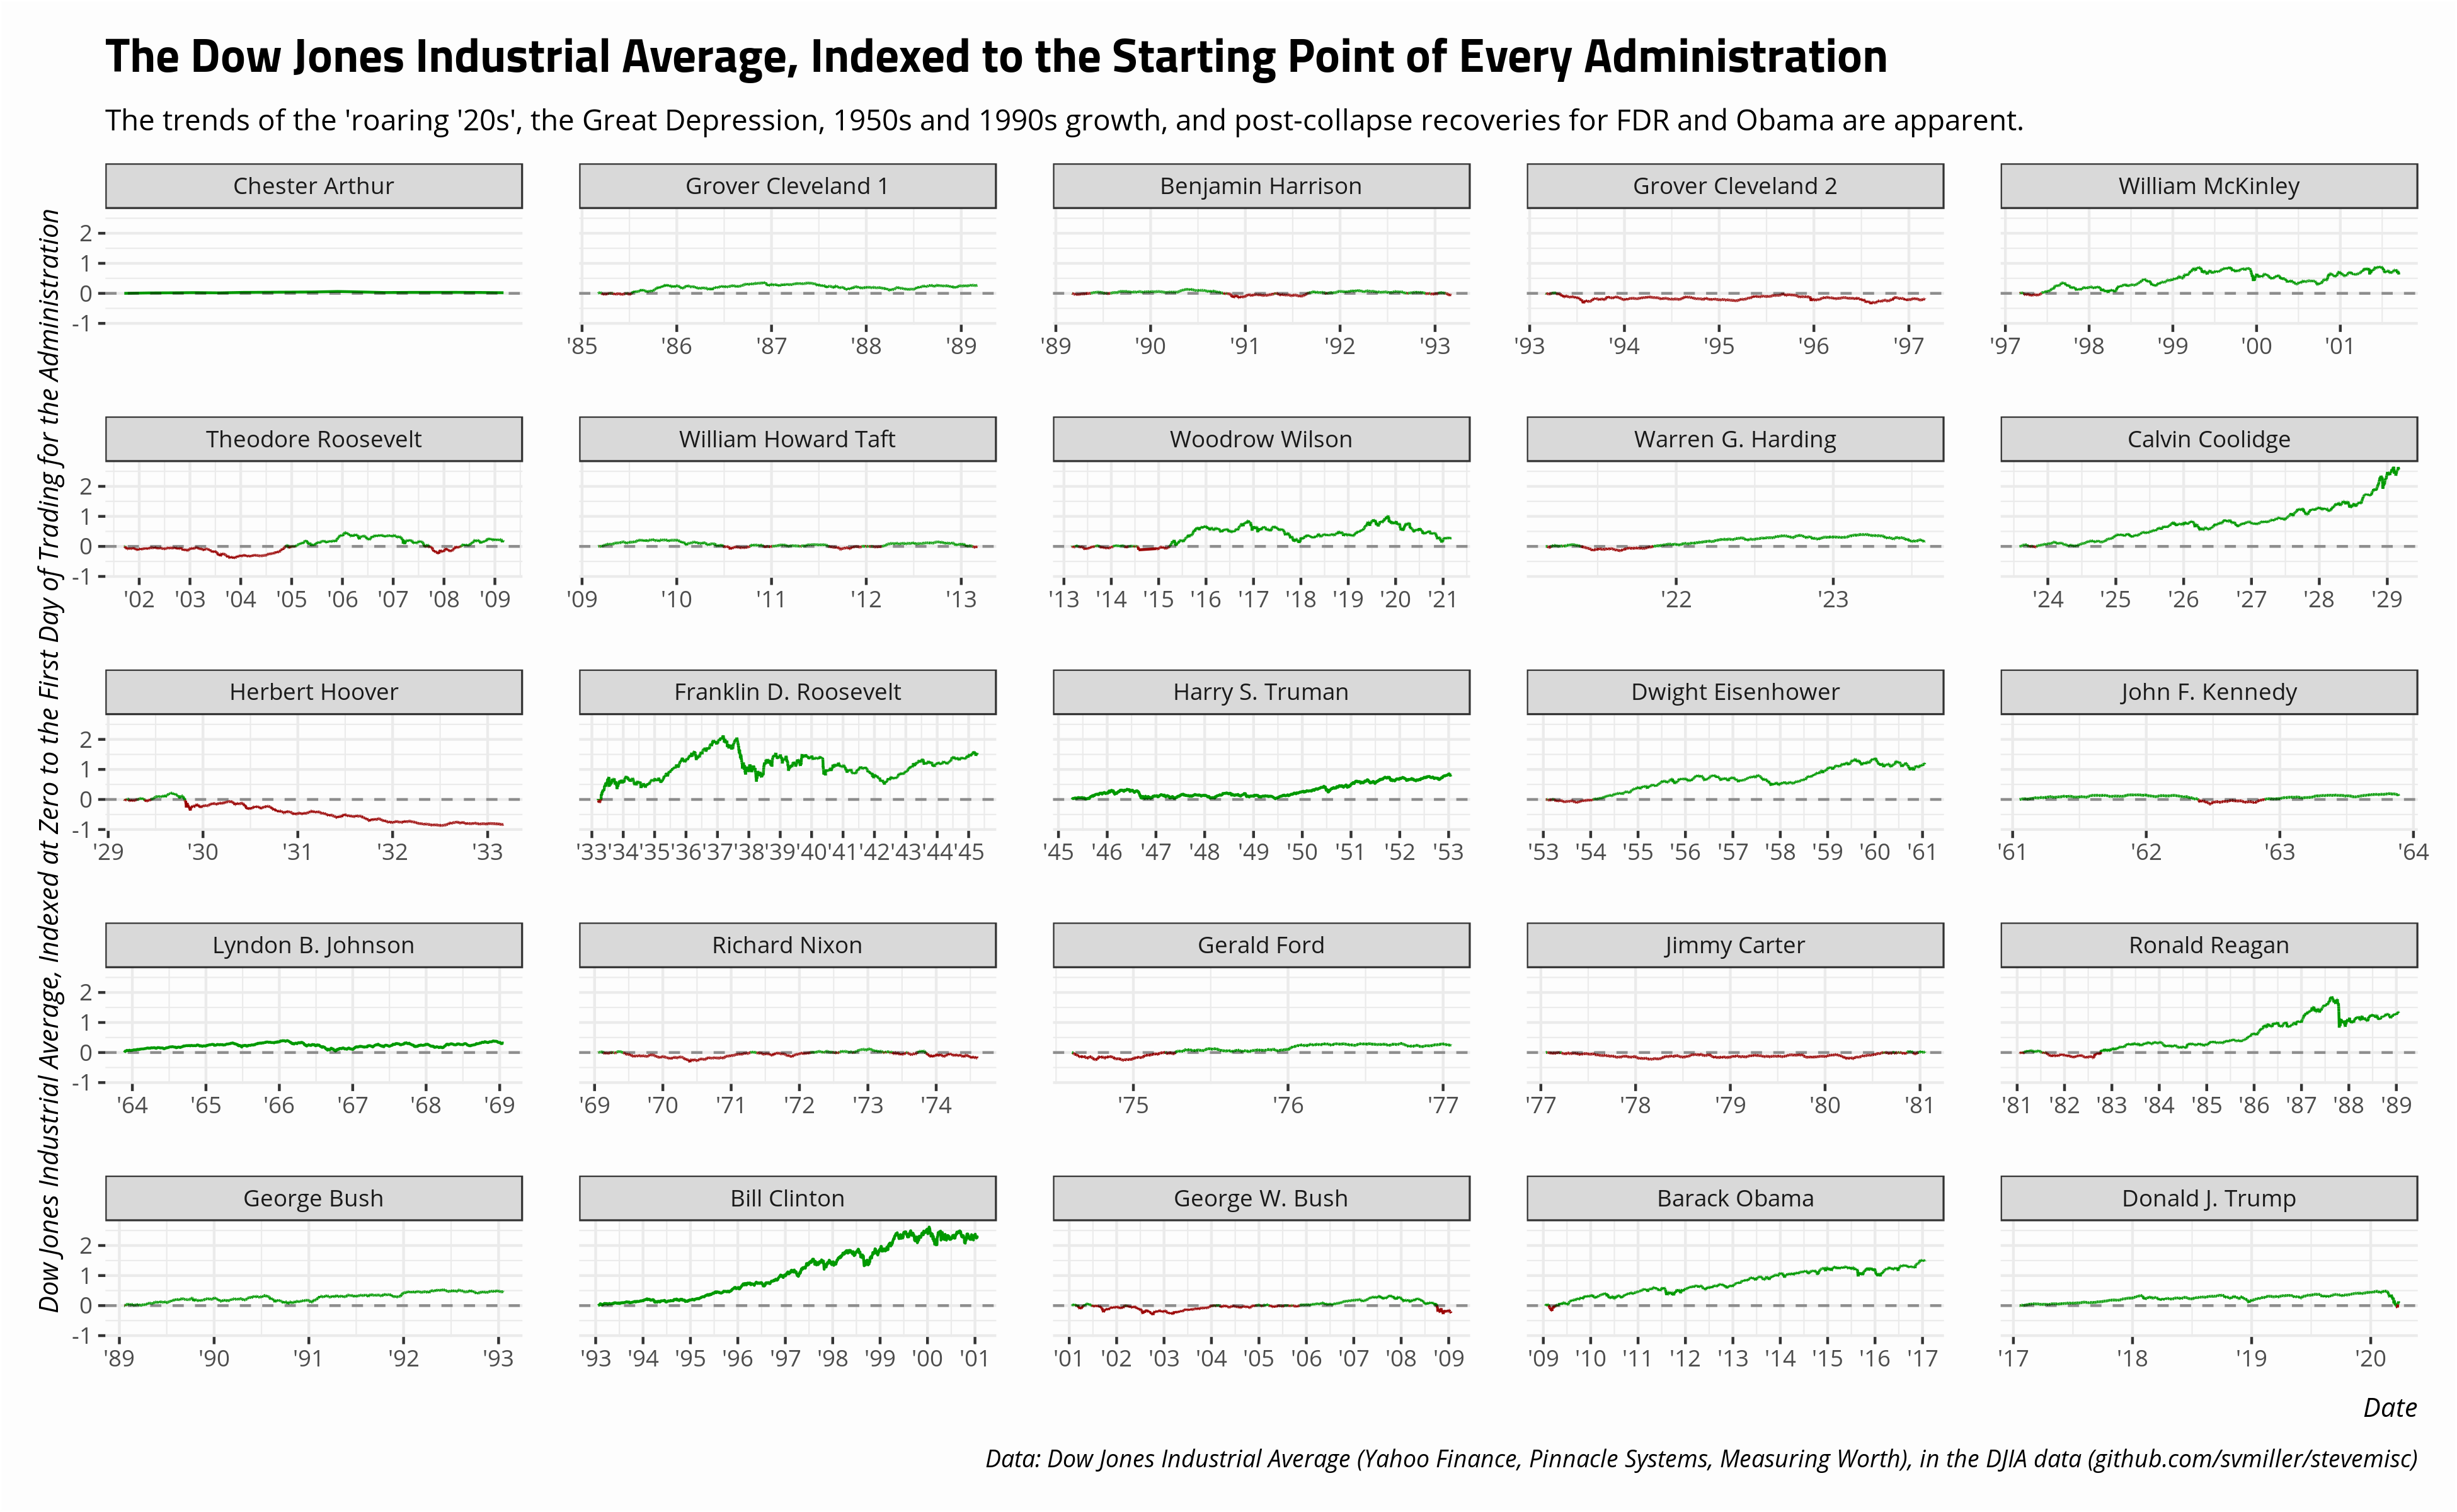 plot of chunk dow-jones-industrial-average-by-presidency